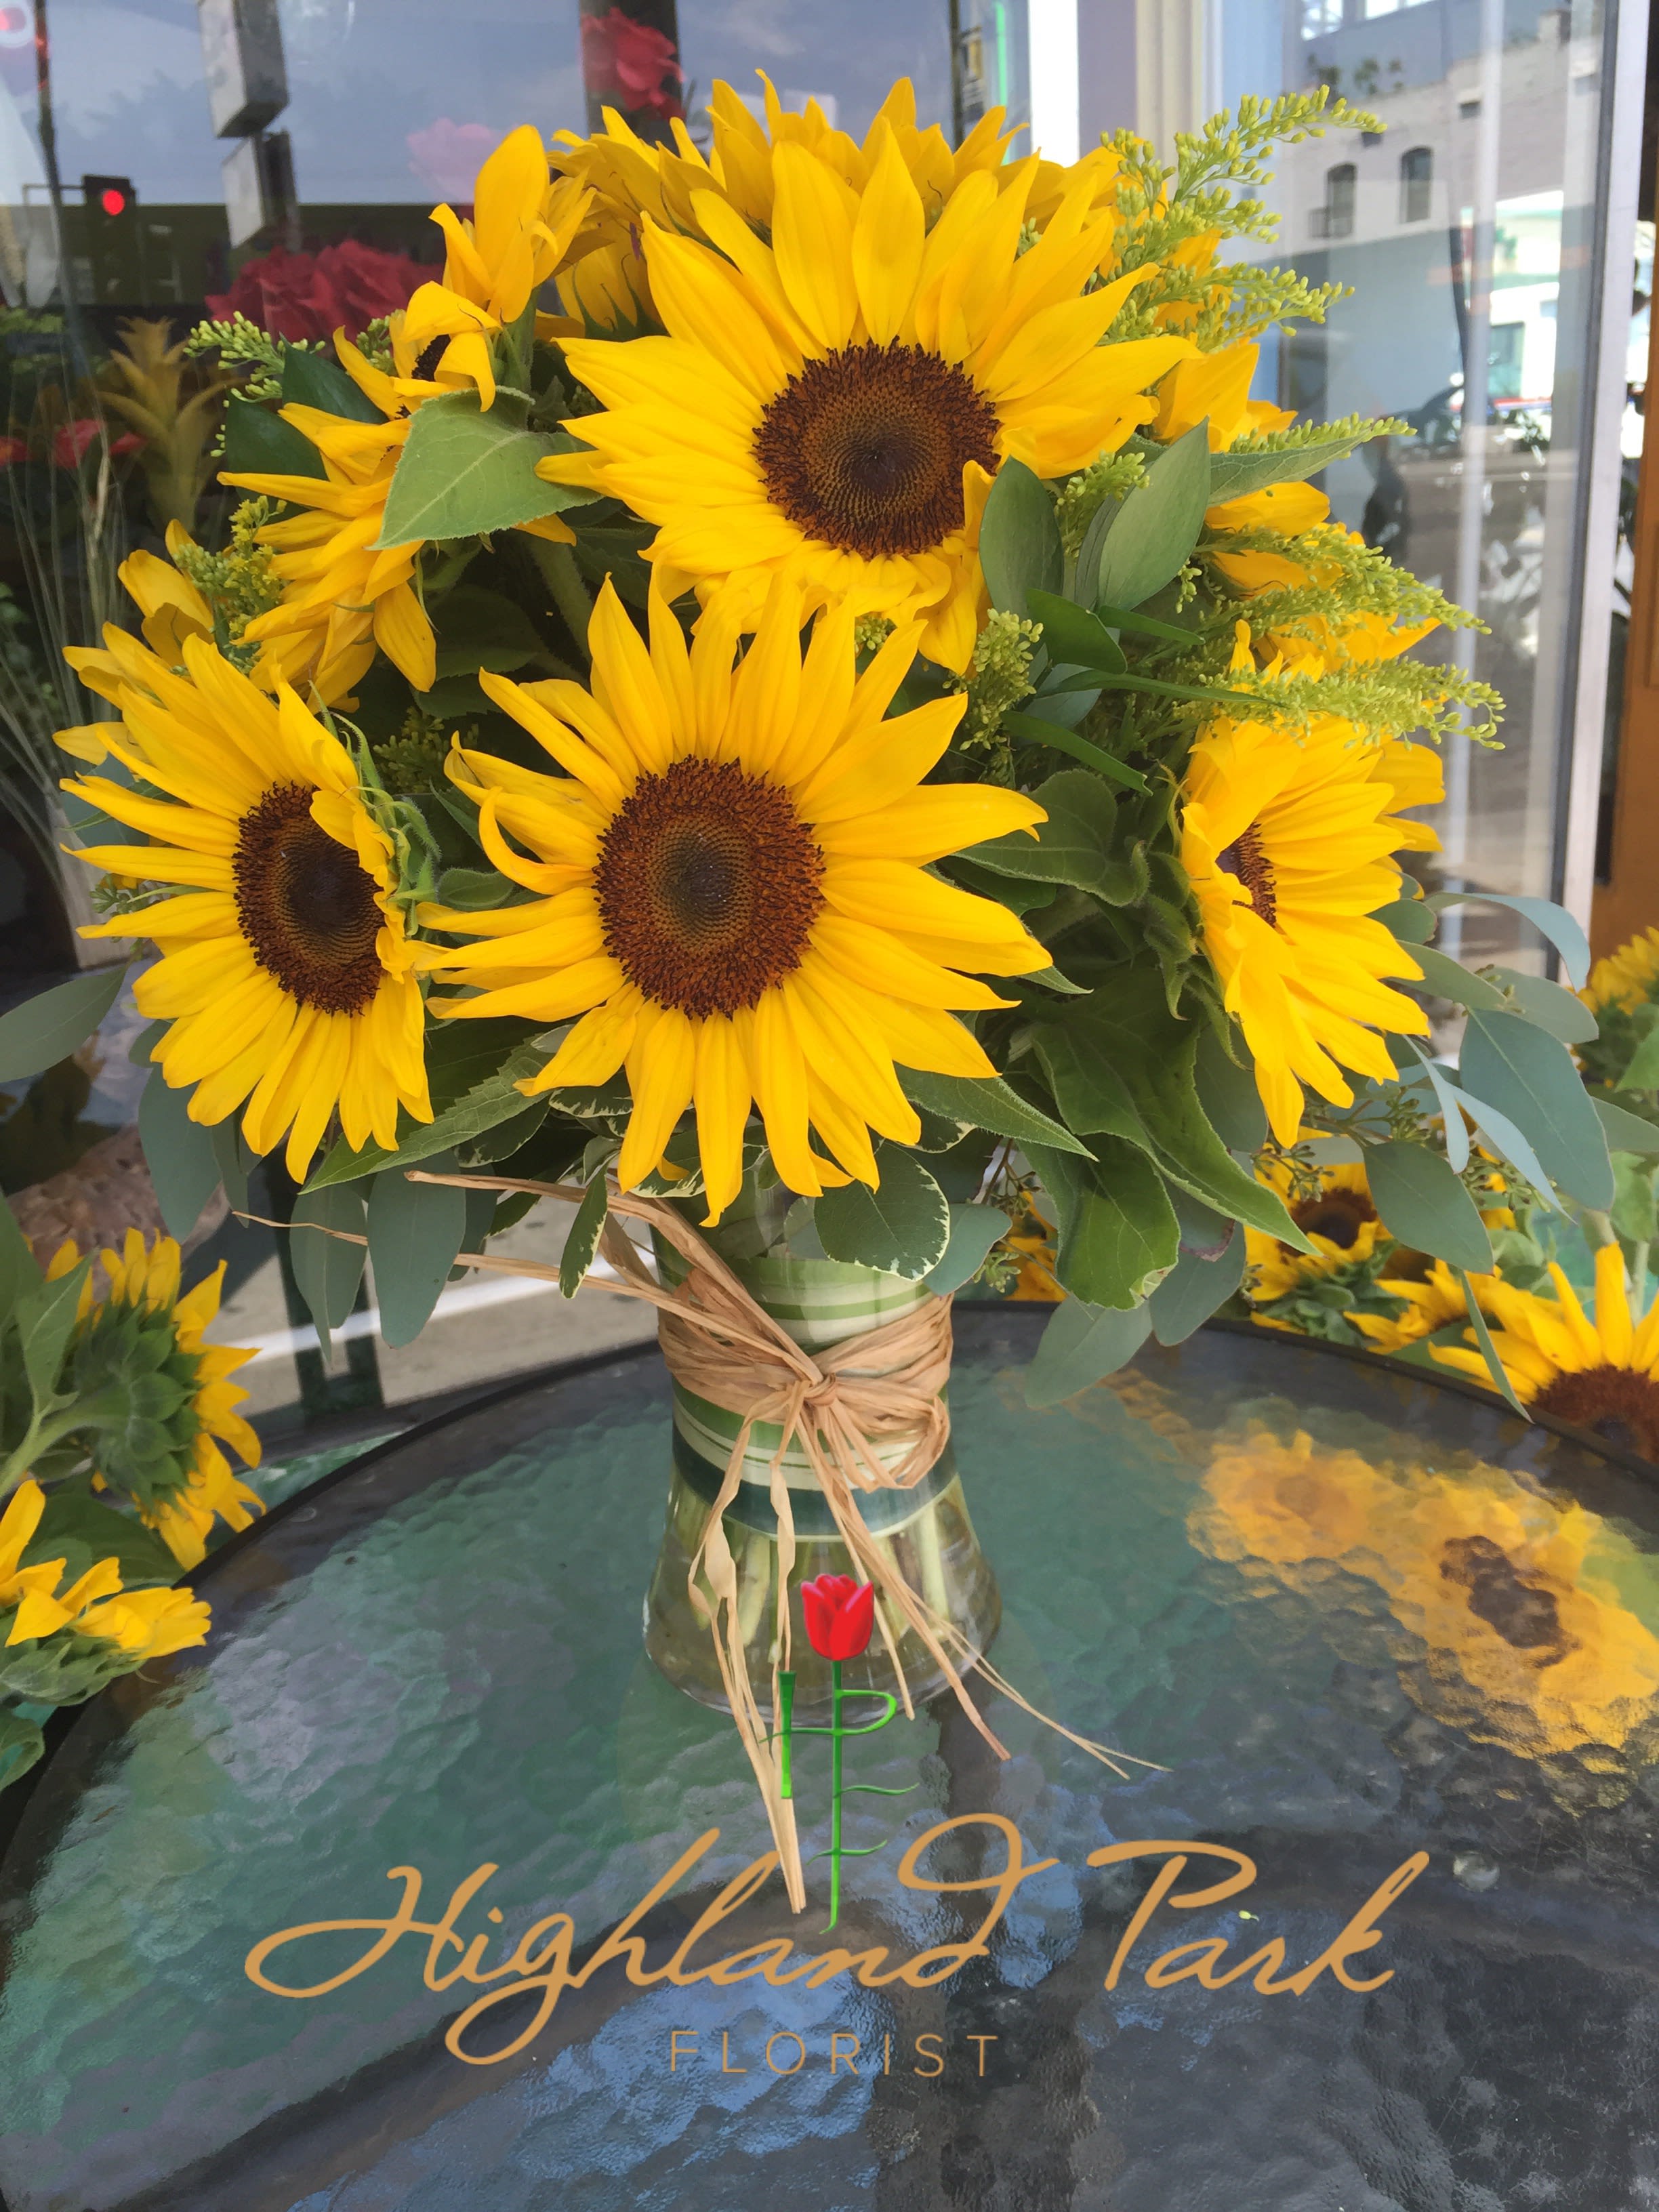 Premium Sunflower Arrangement Vase By Highland Park Florist